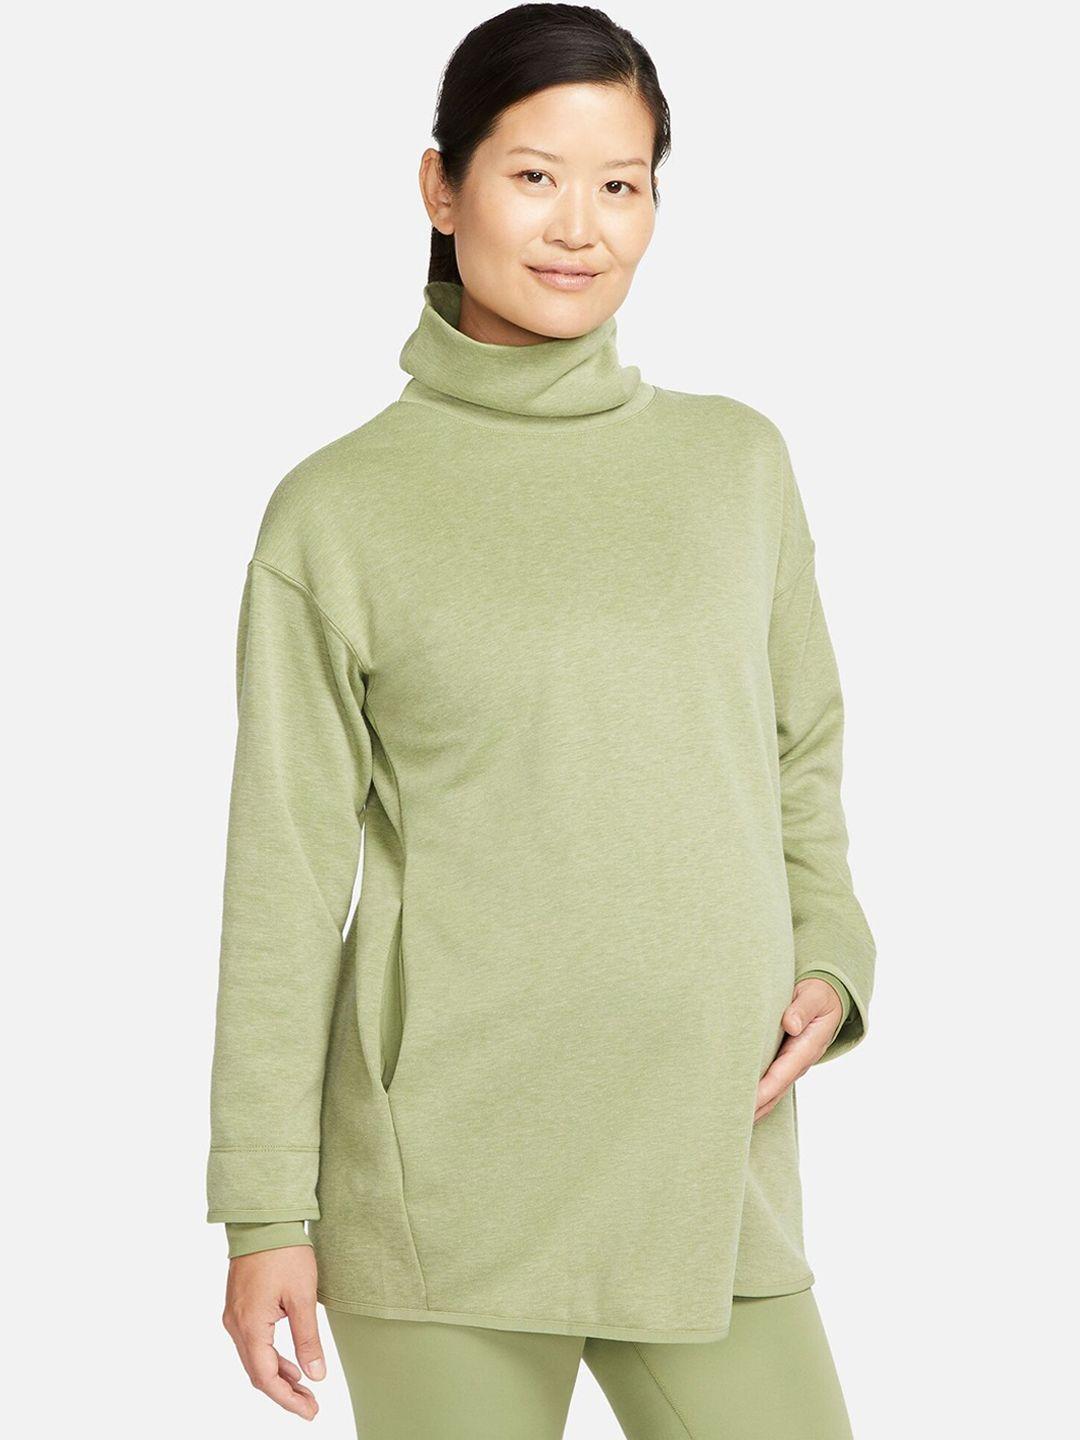 nike maternity turtle neck pullover sweatshirt